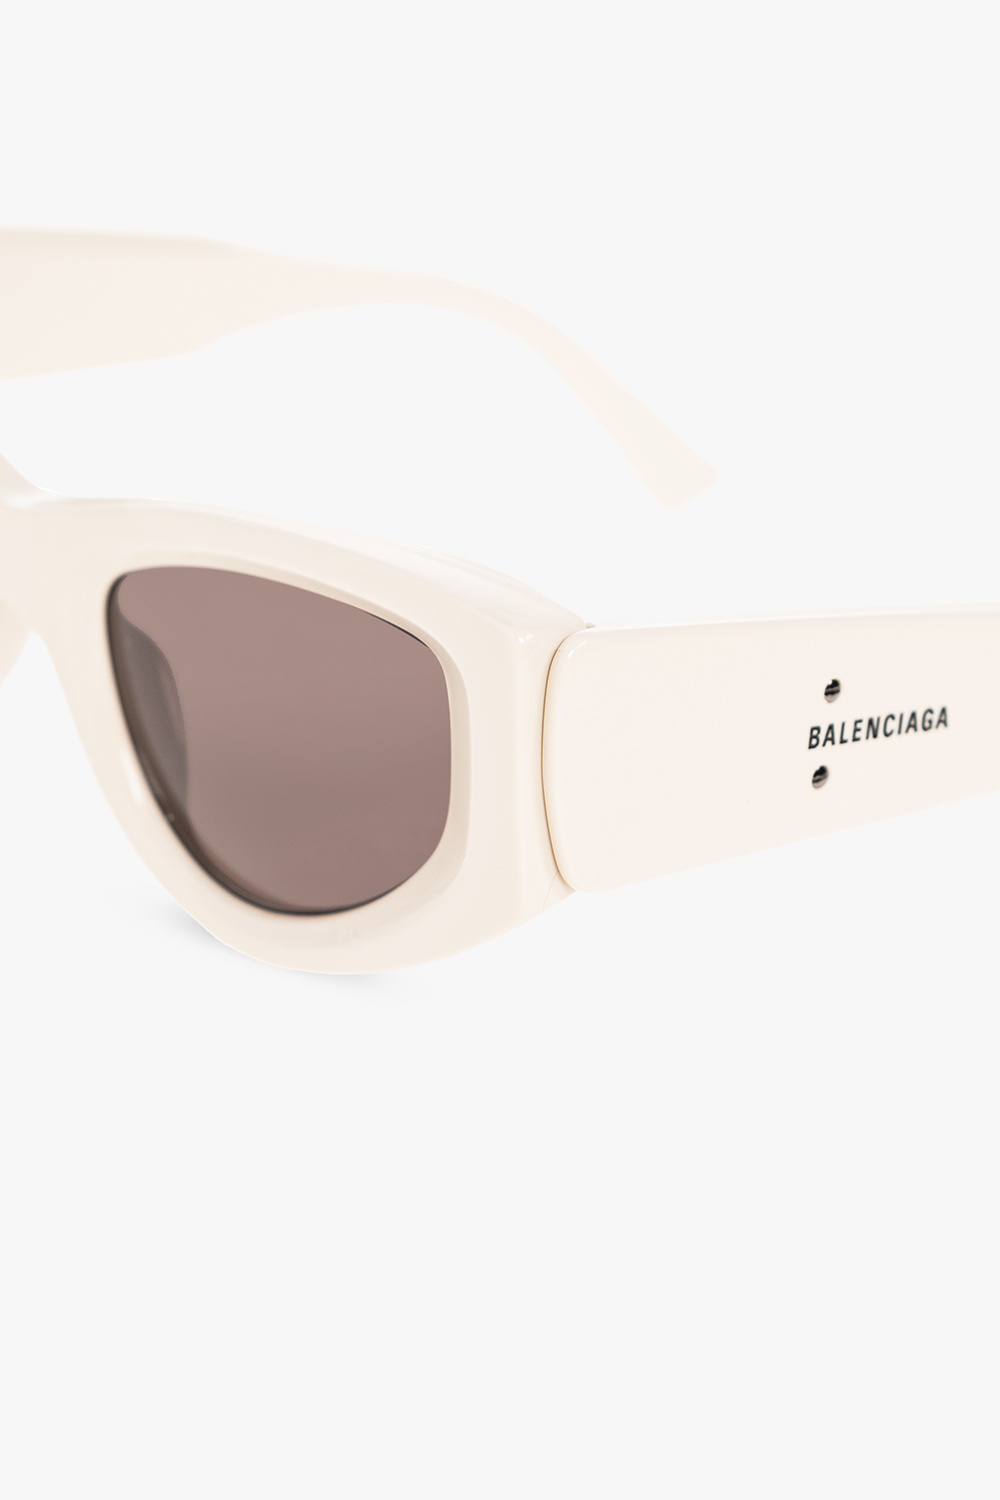 Balenciaga ‘Odeon B40 cat’ sunglasses